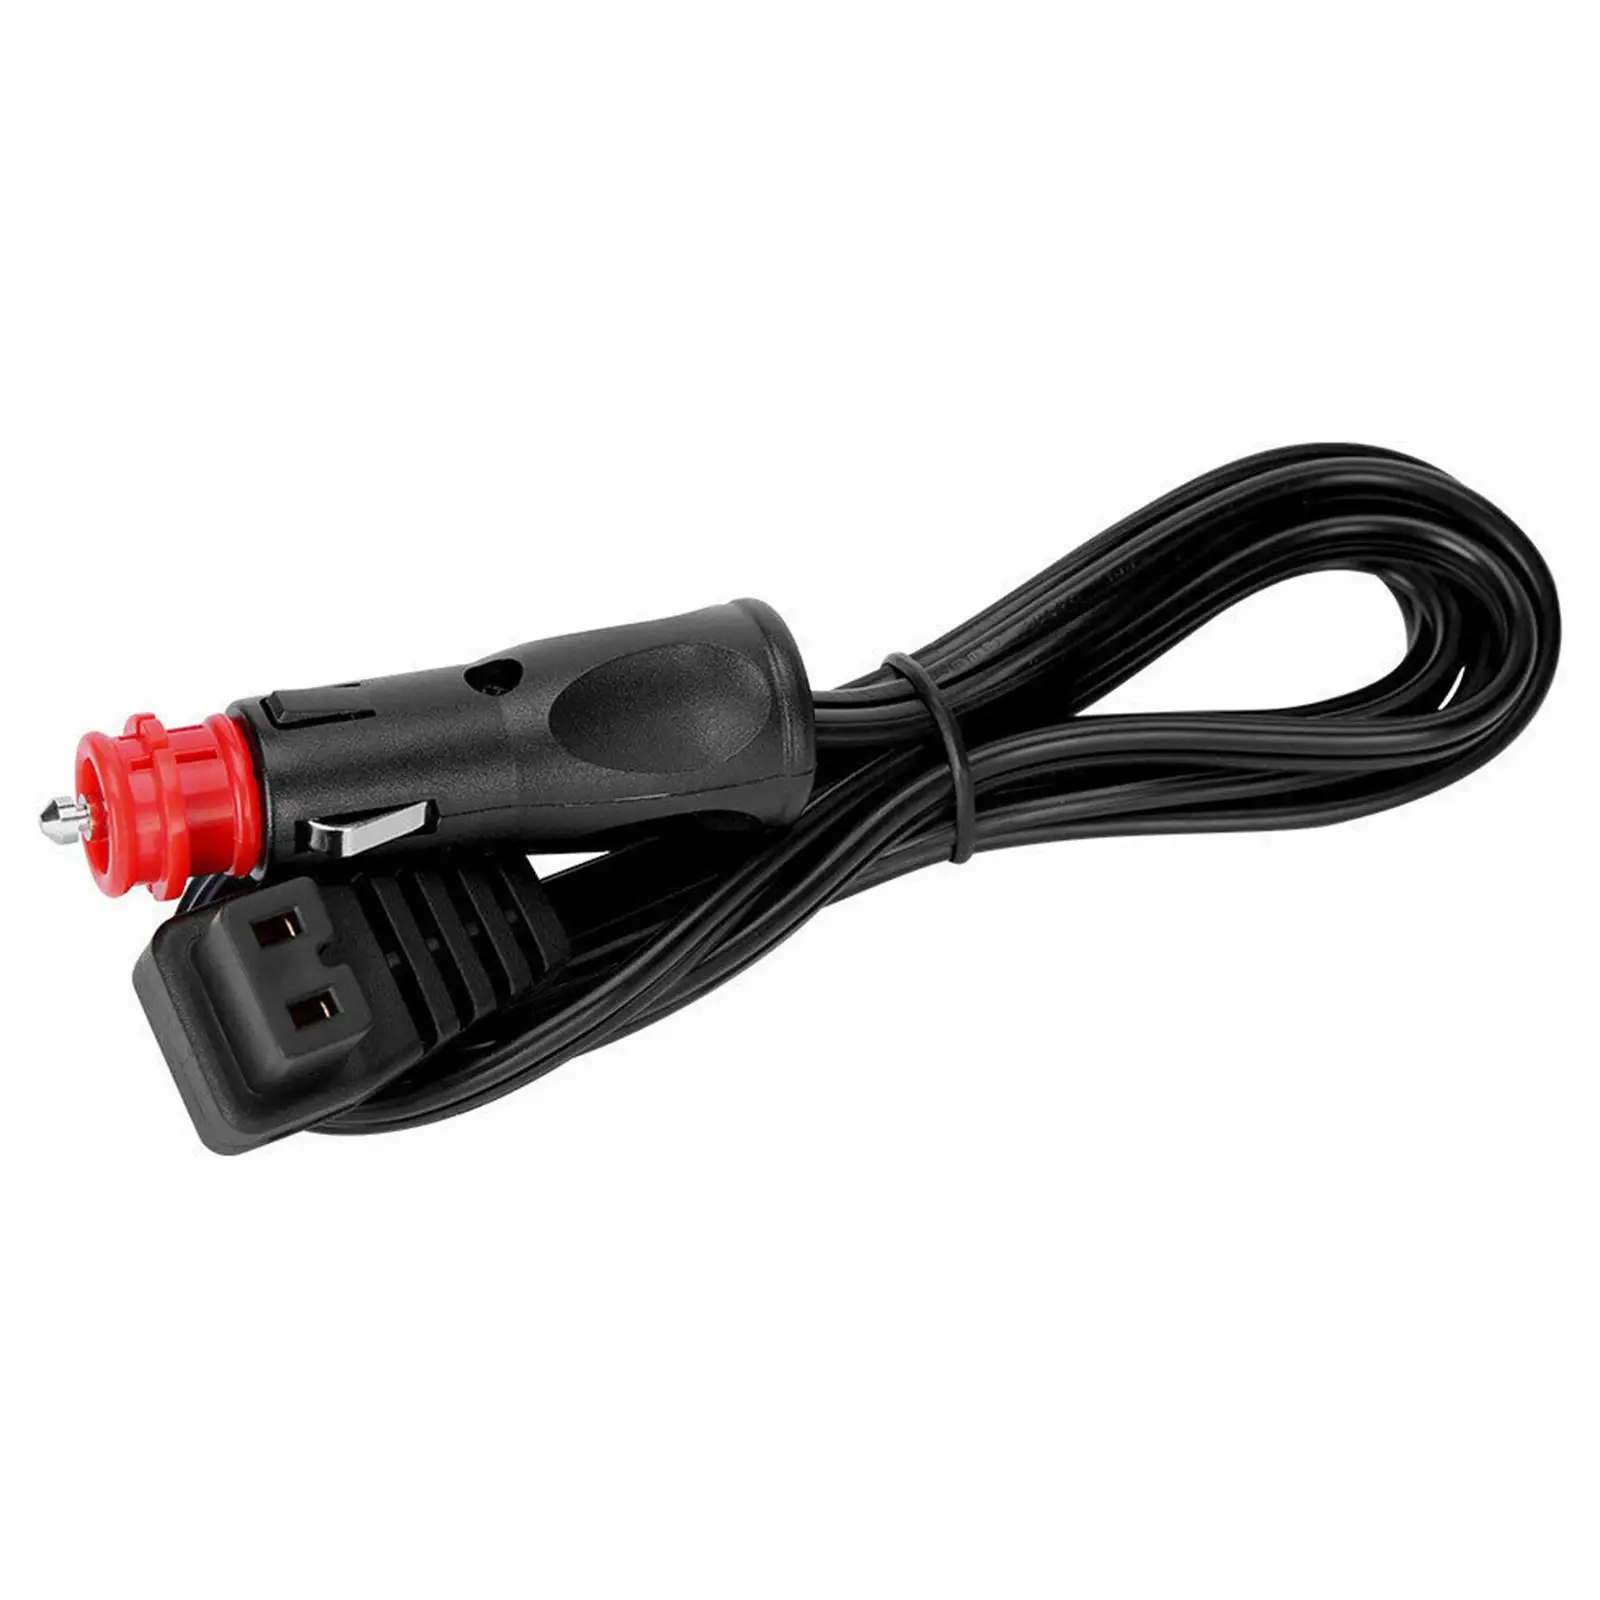 Car Fridge Power Adapter 2M  Plug Extension Power Cable